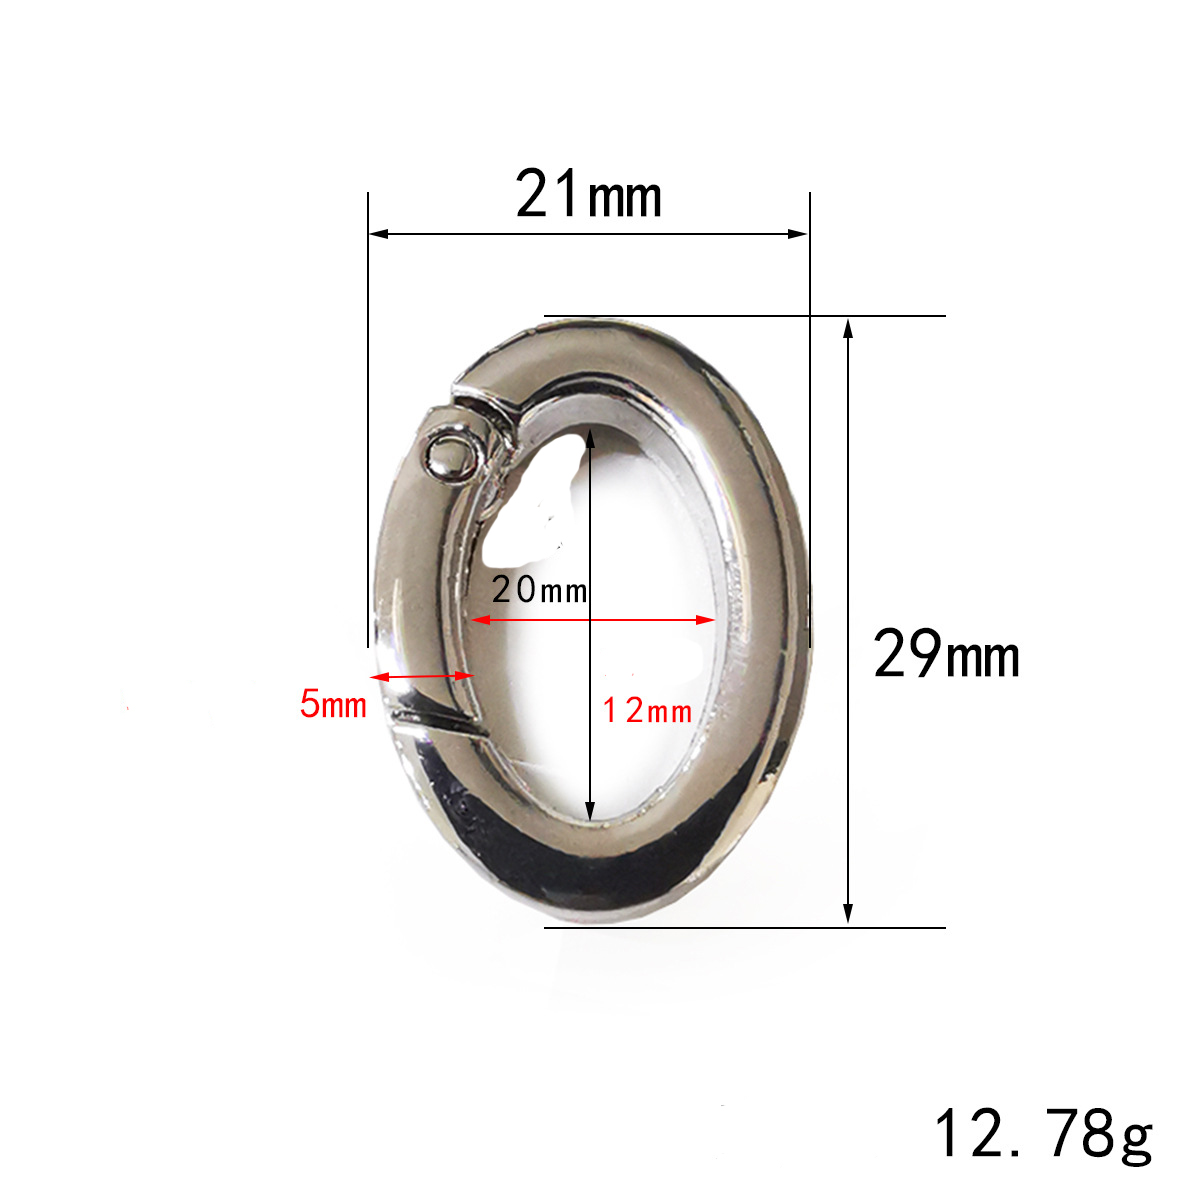 5:20mm inside diameter oval spring buckle